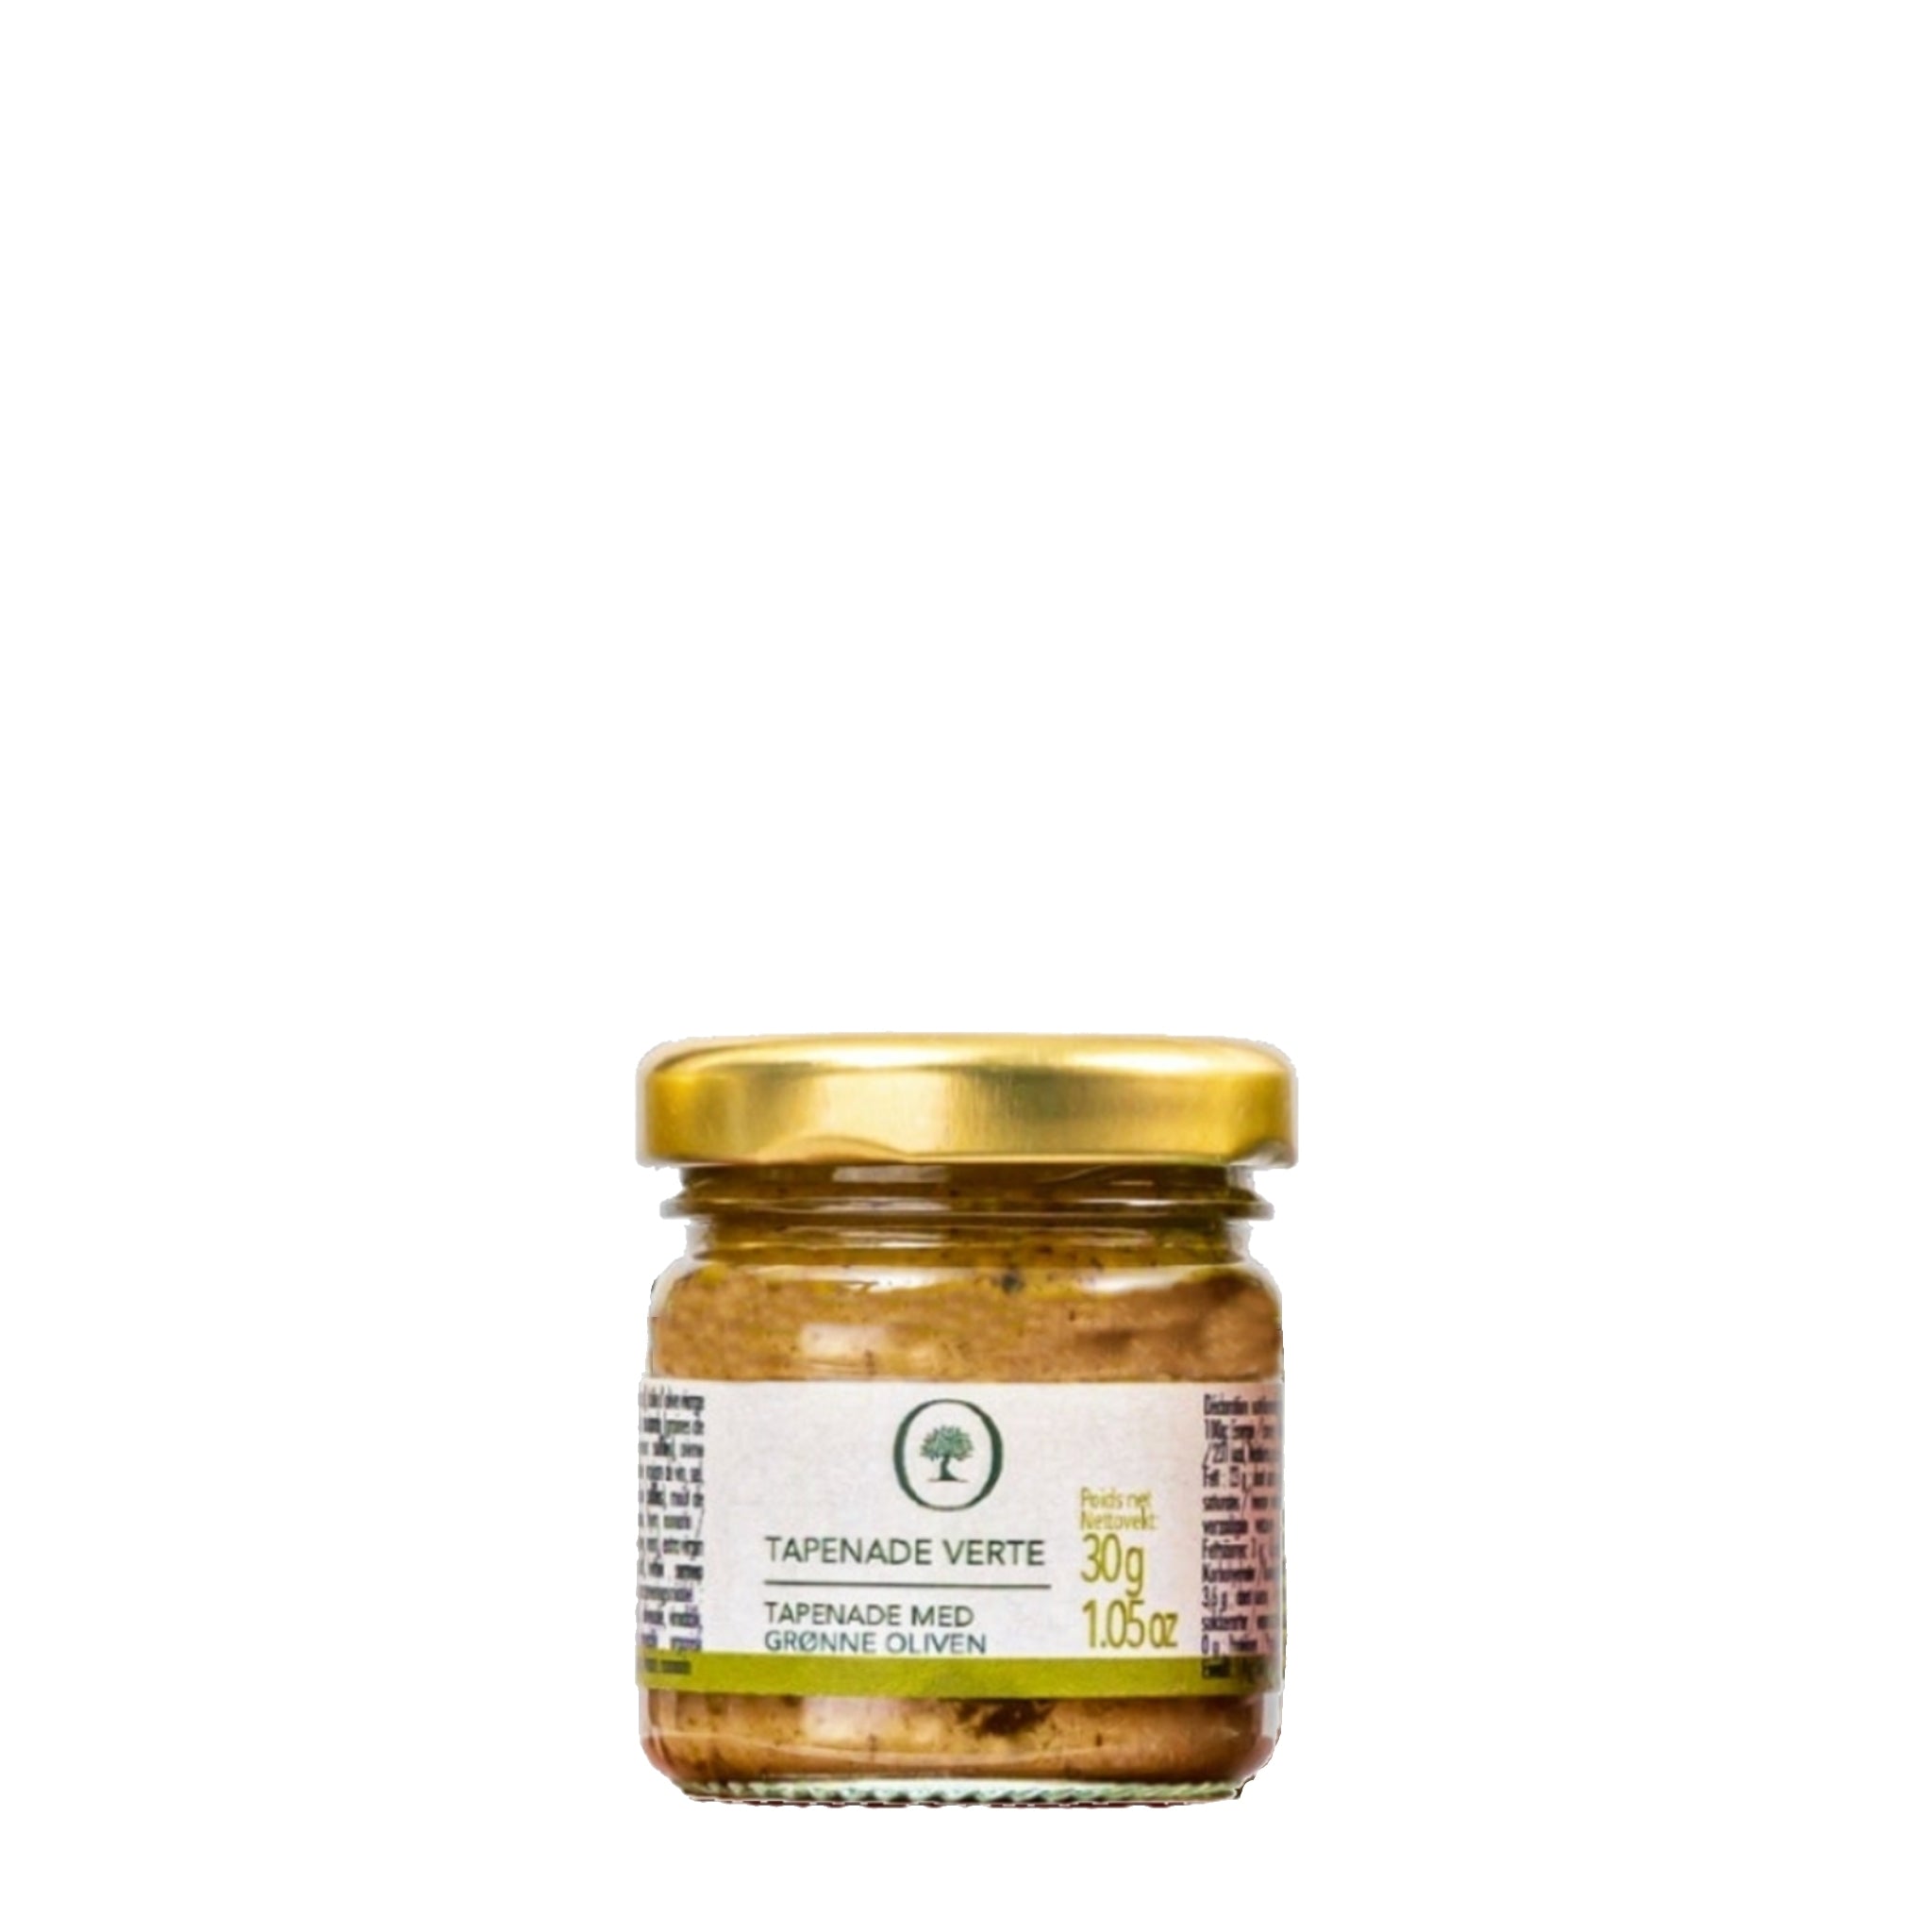 Mini klassisk tapenade med grønne oliven 30g fra Oliviers & Co